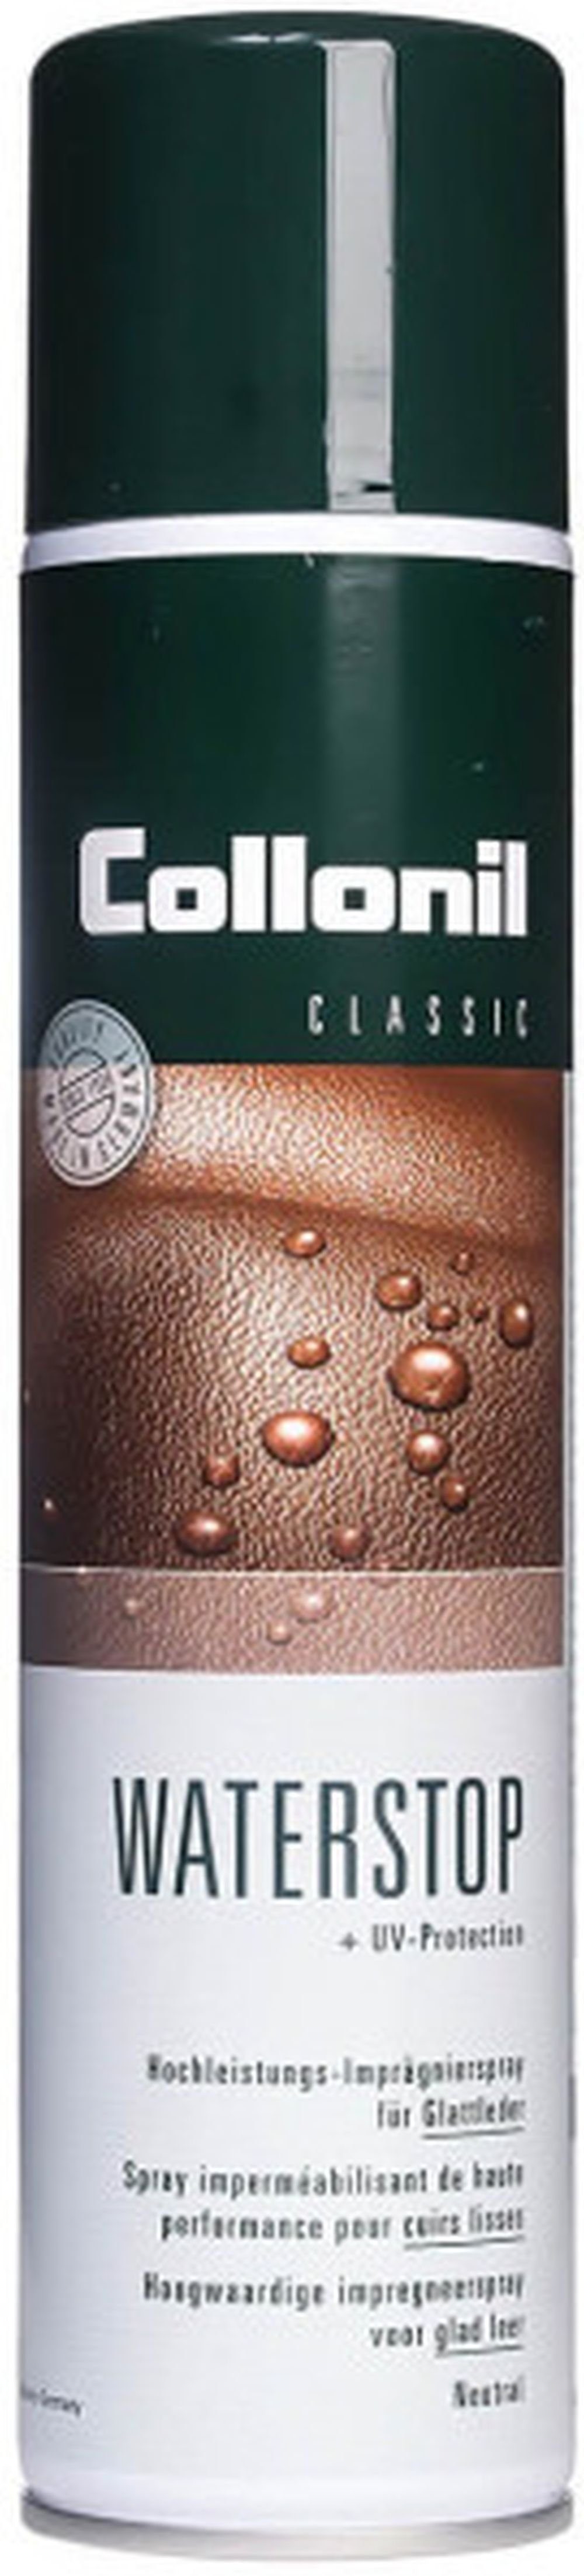 Collonil Waterstop Classic 400 ml - Imprägnierspray mit UV-Schutz Schuh-Imprägnierspray